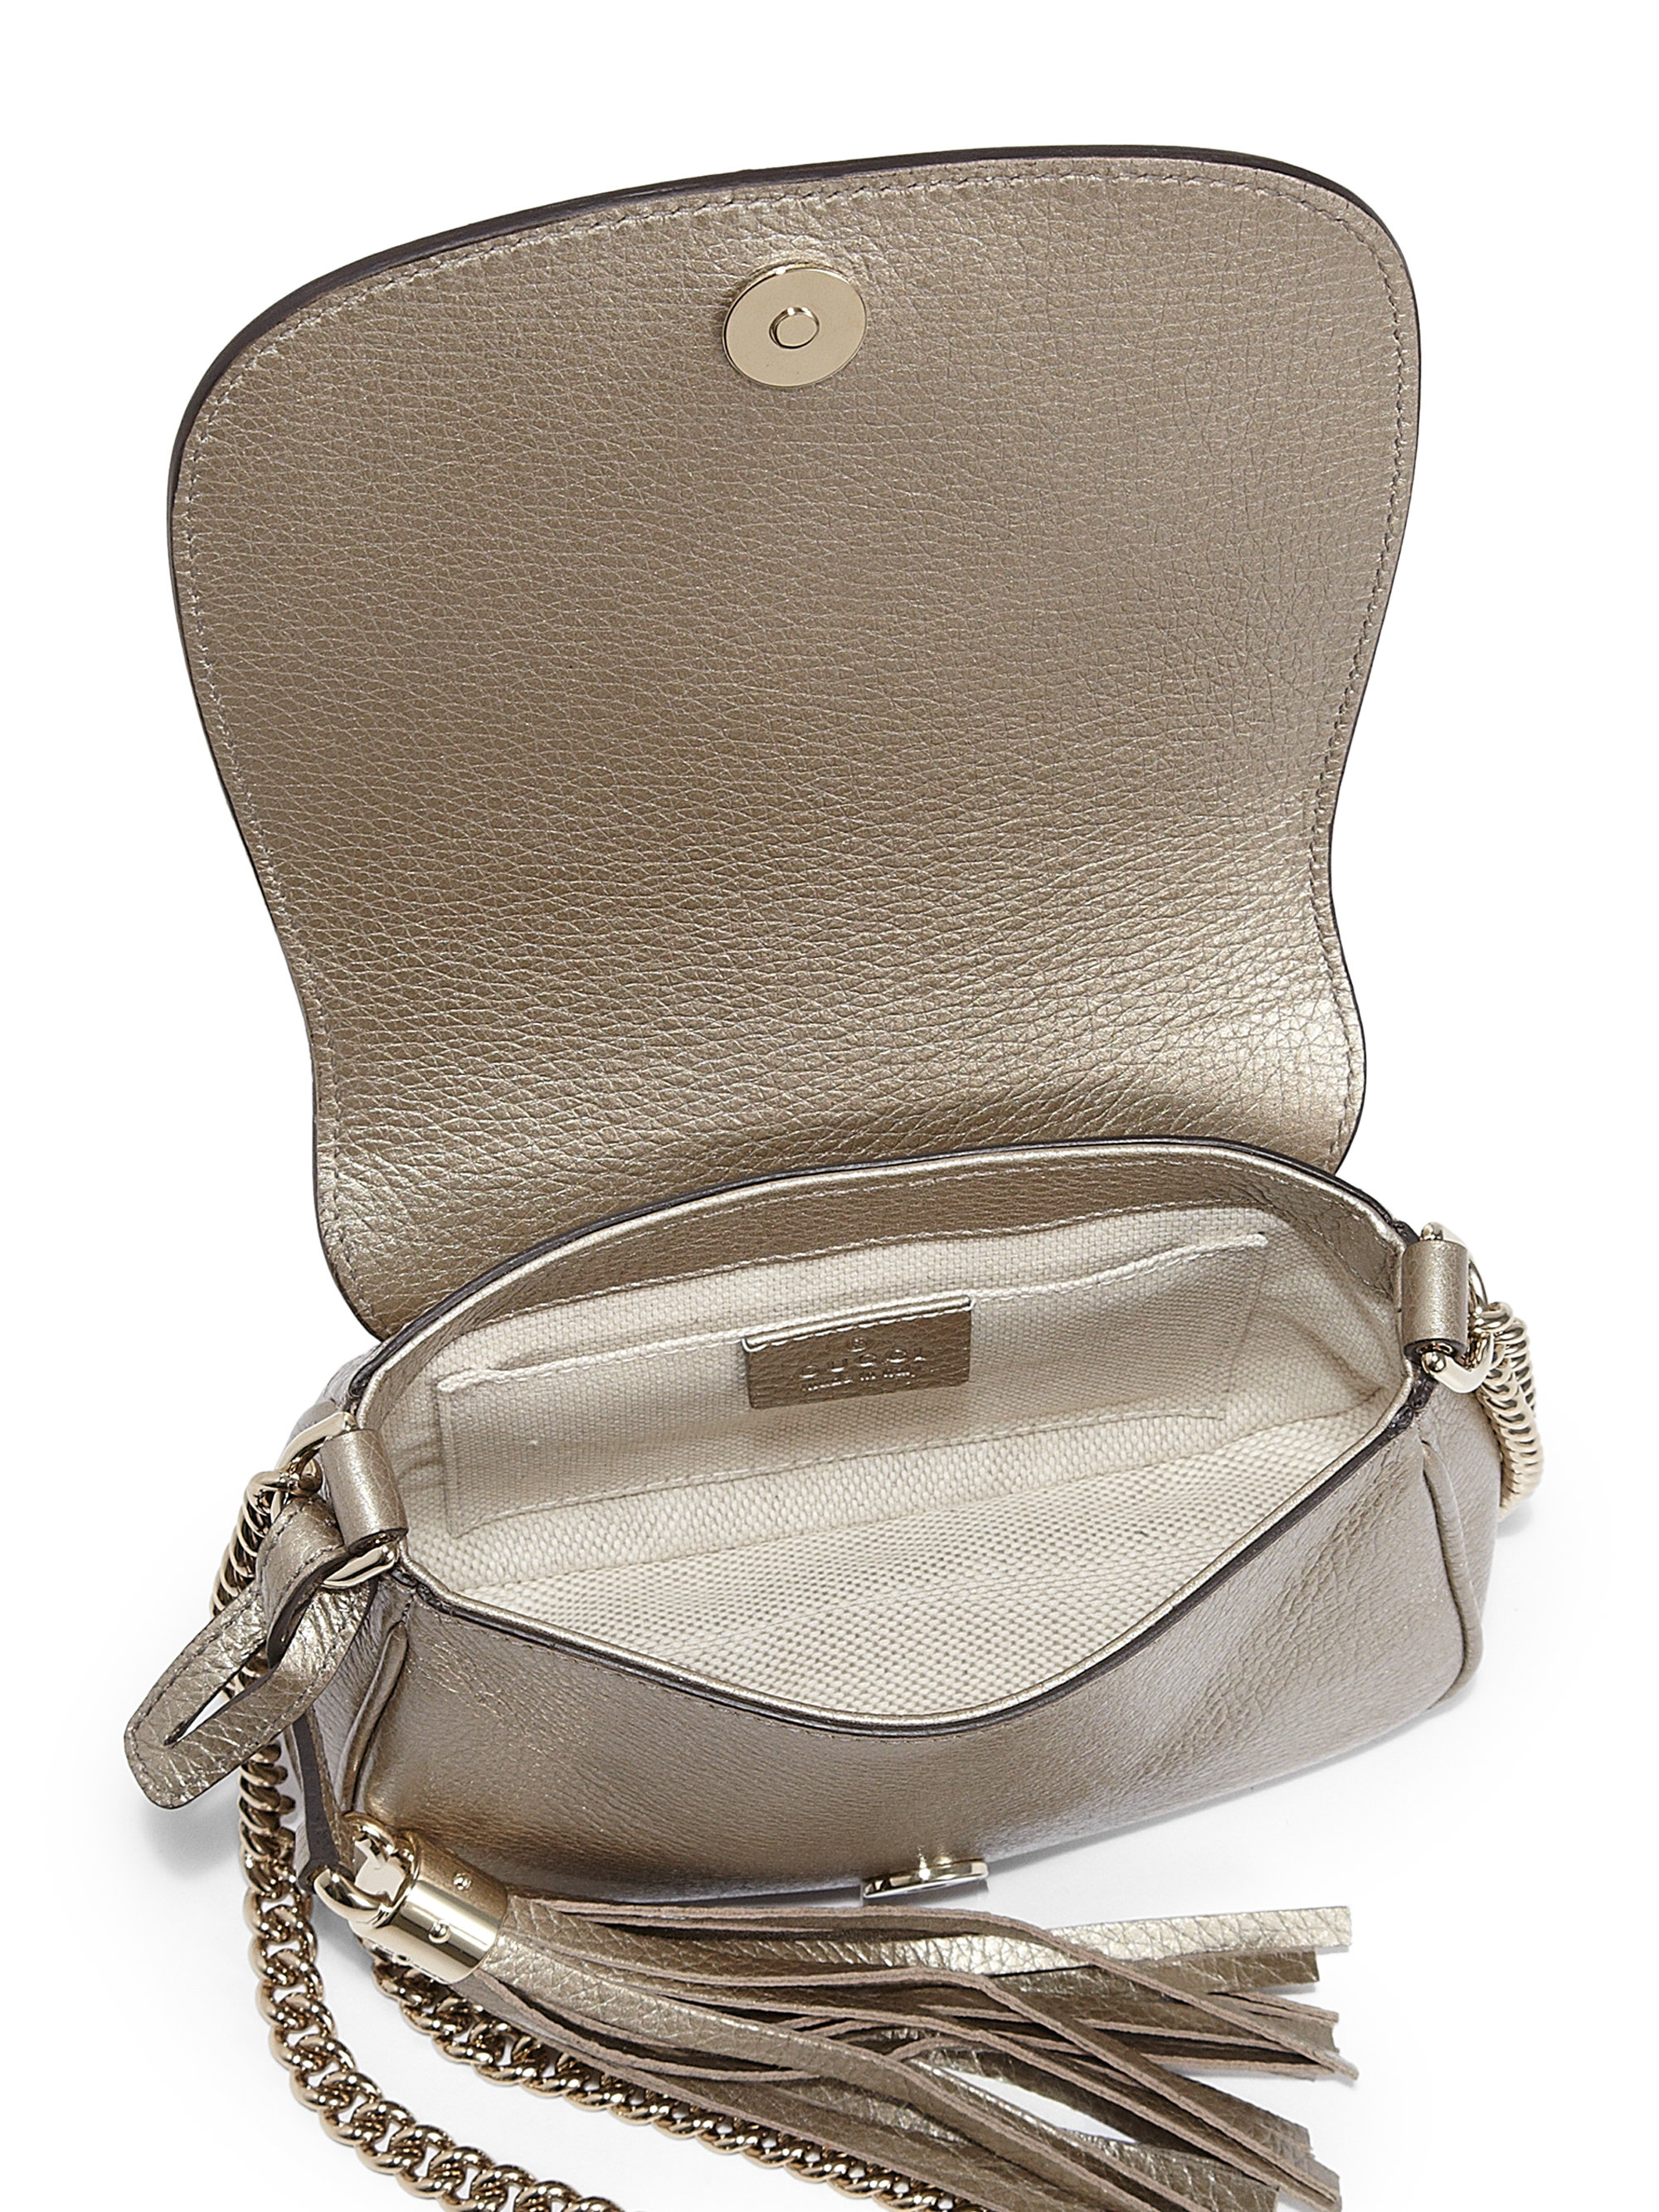 Gucci Soho Metallic Leather Shoulder Bag - Lyst